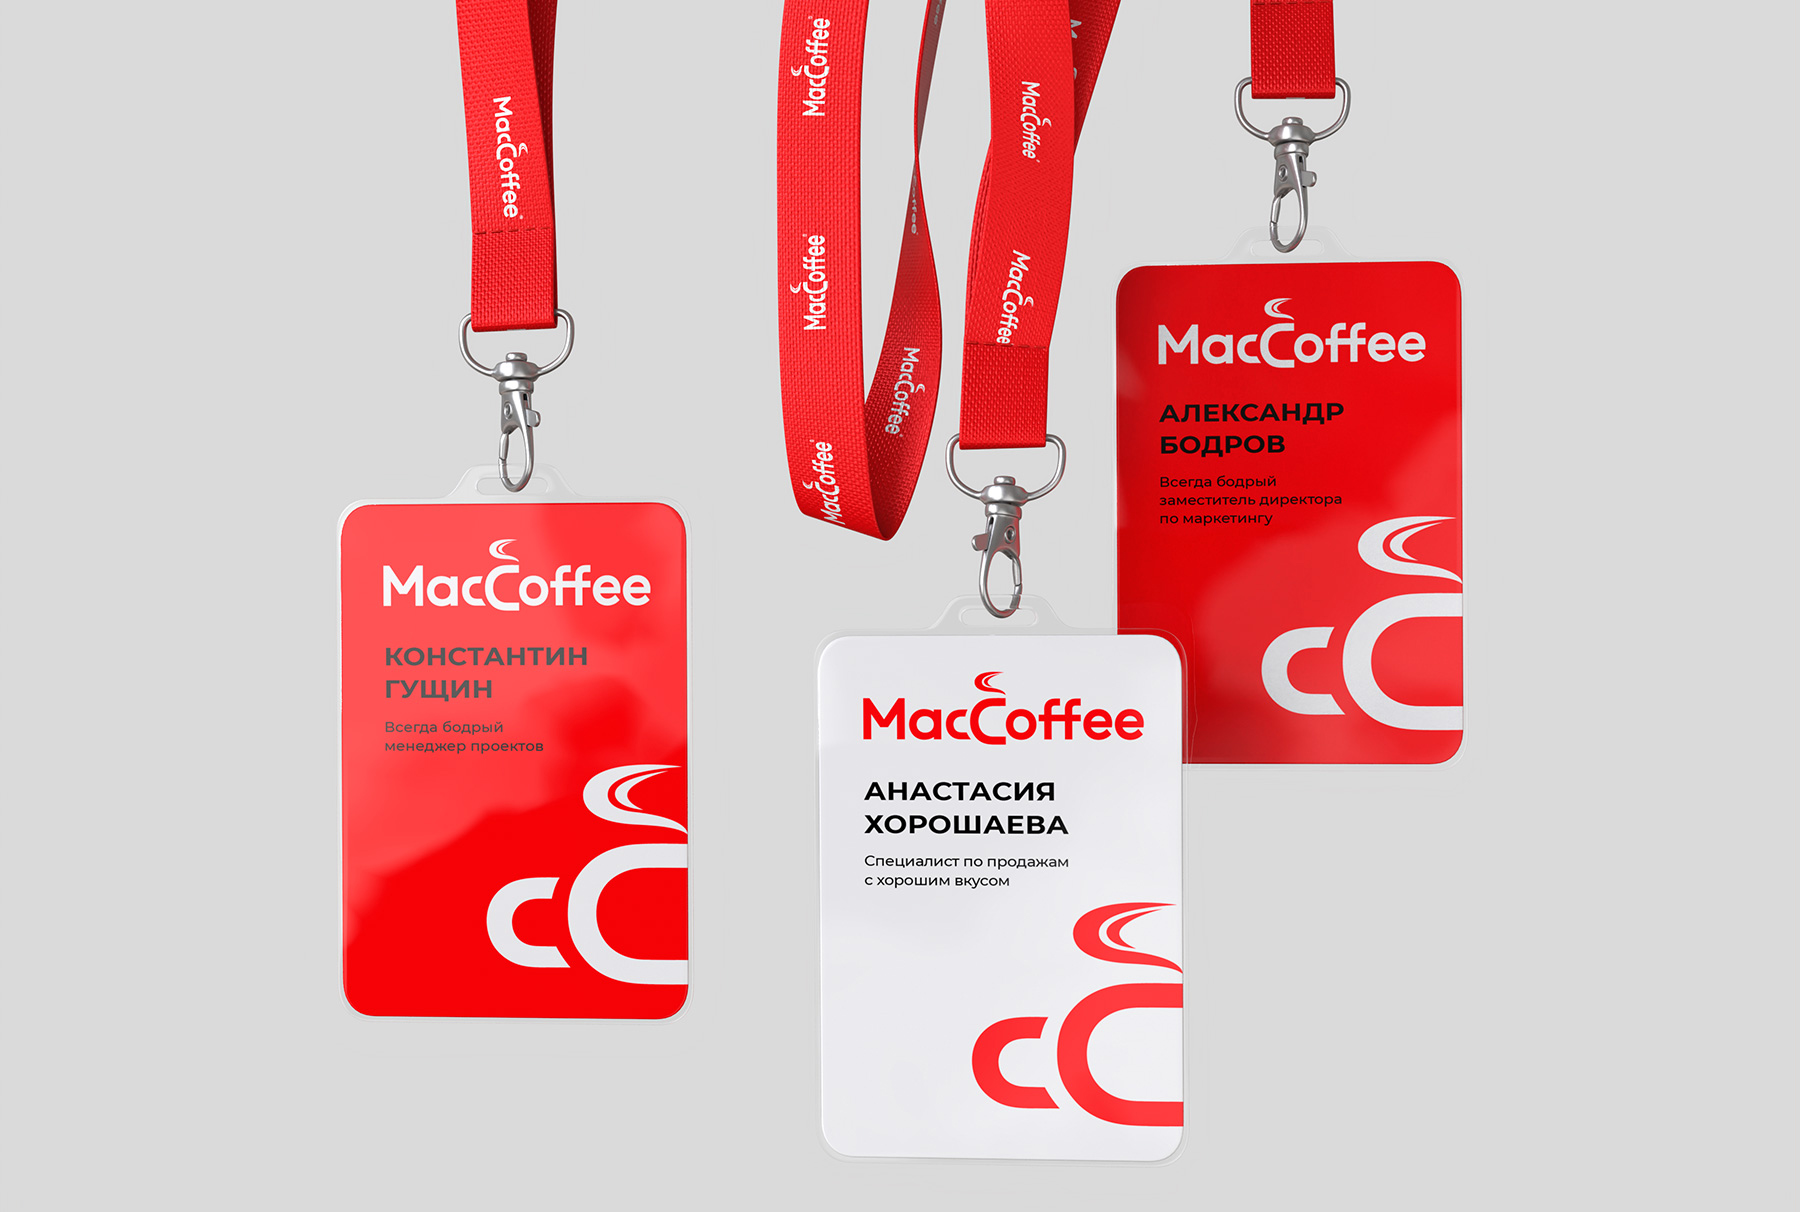 Maccoffee badge design